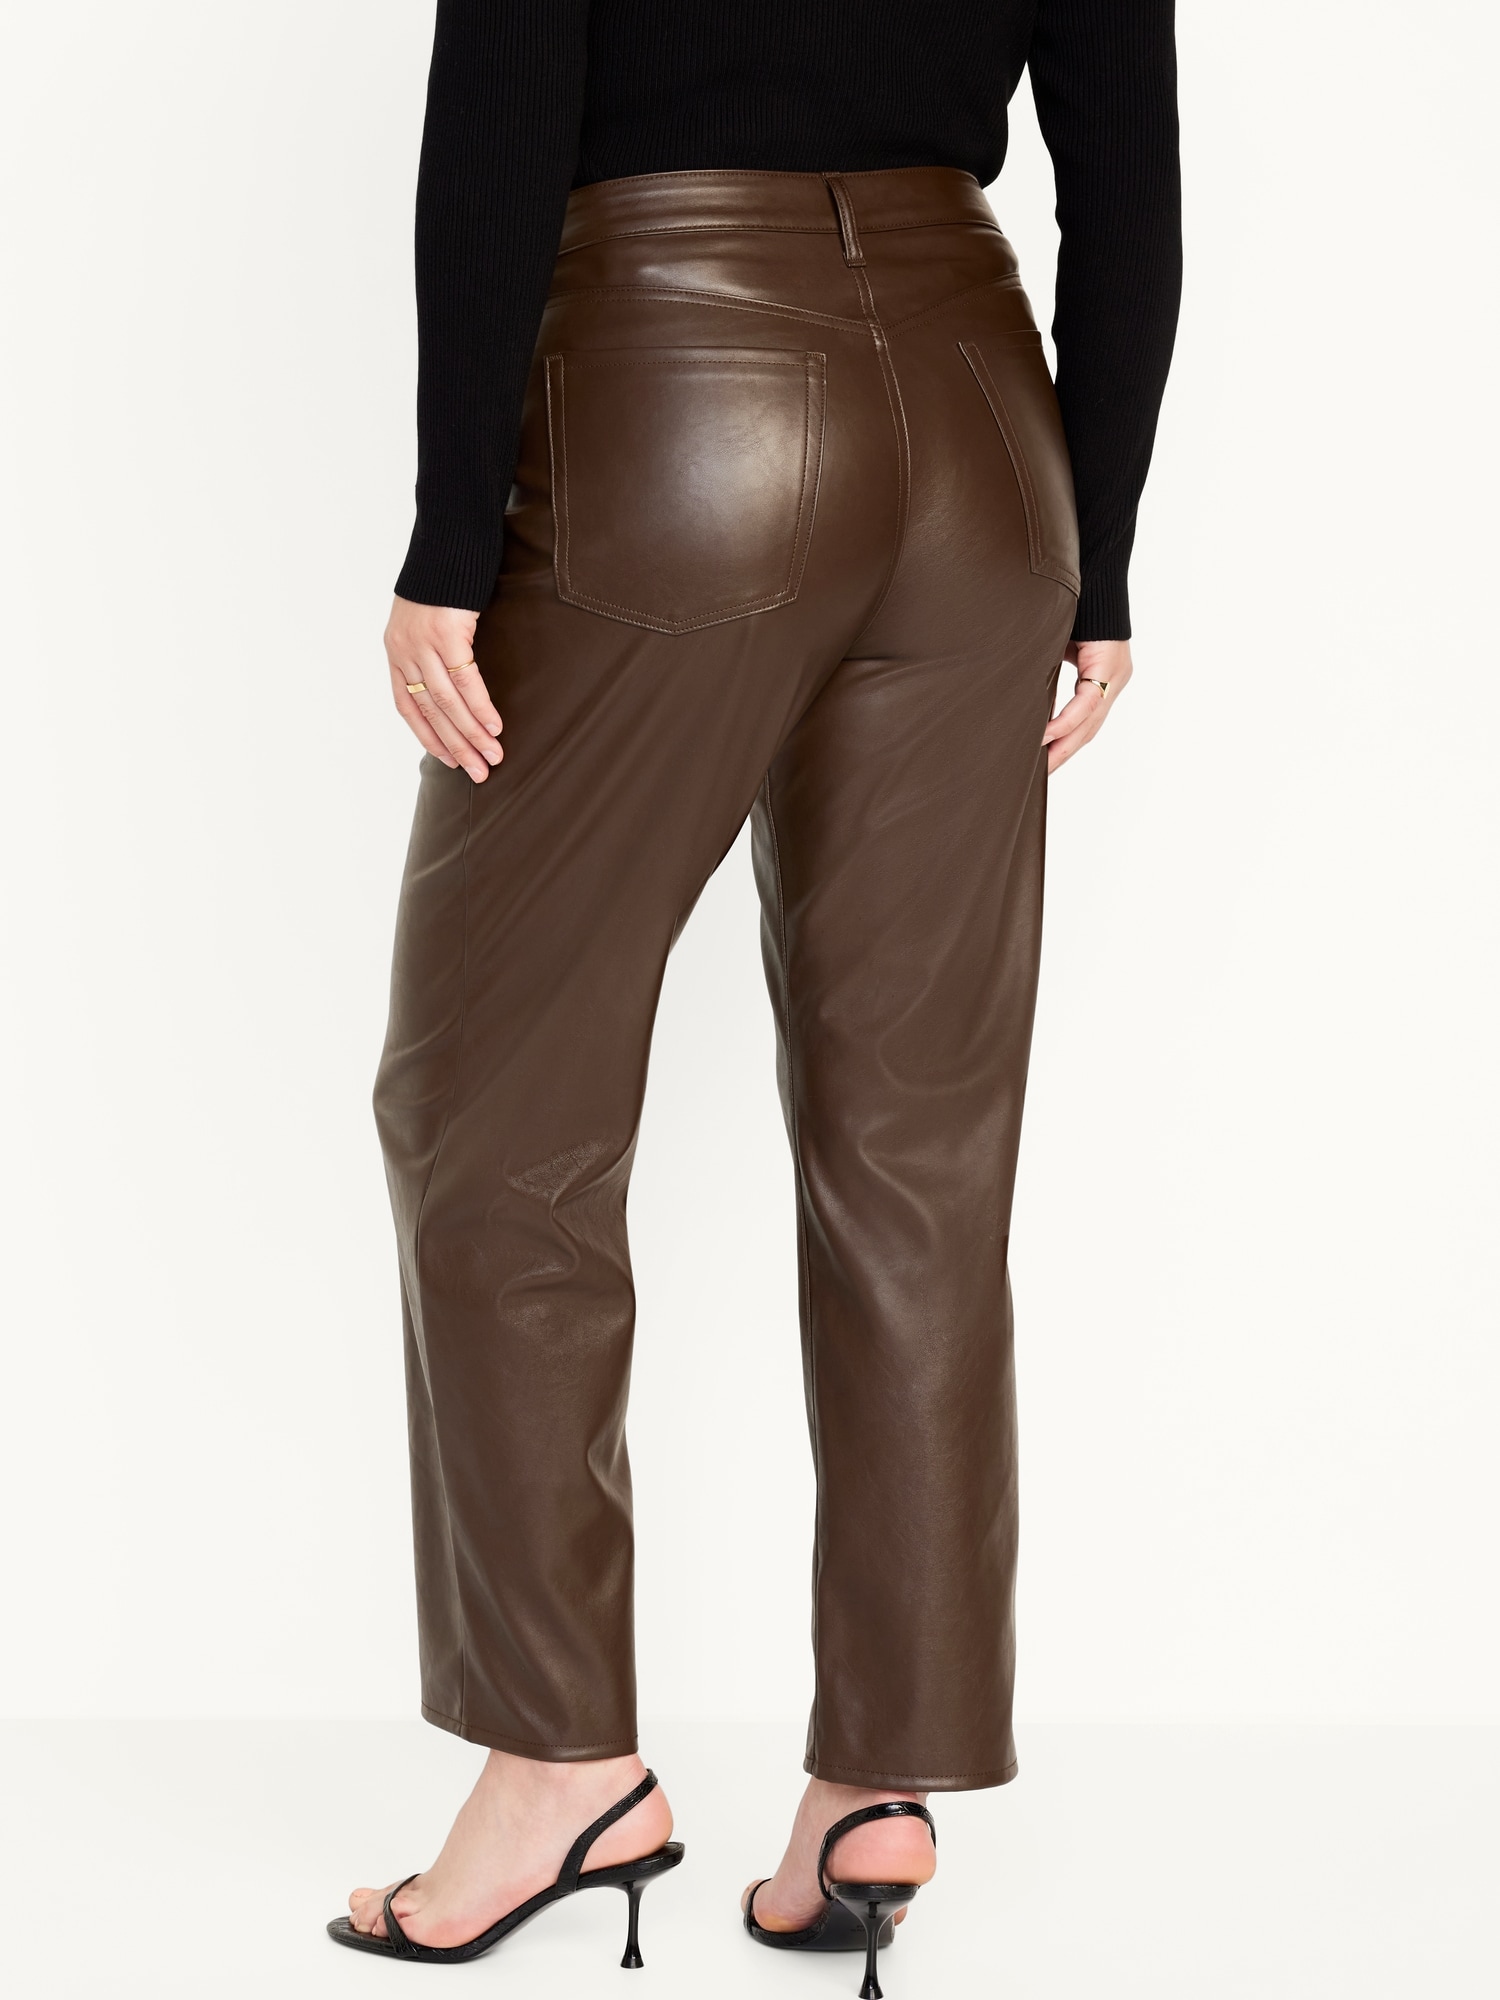 Brown Vegan Leather Pants  chocolate brown leather pants